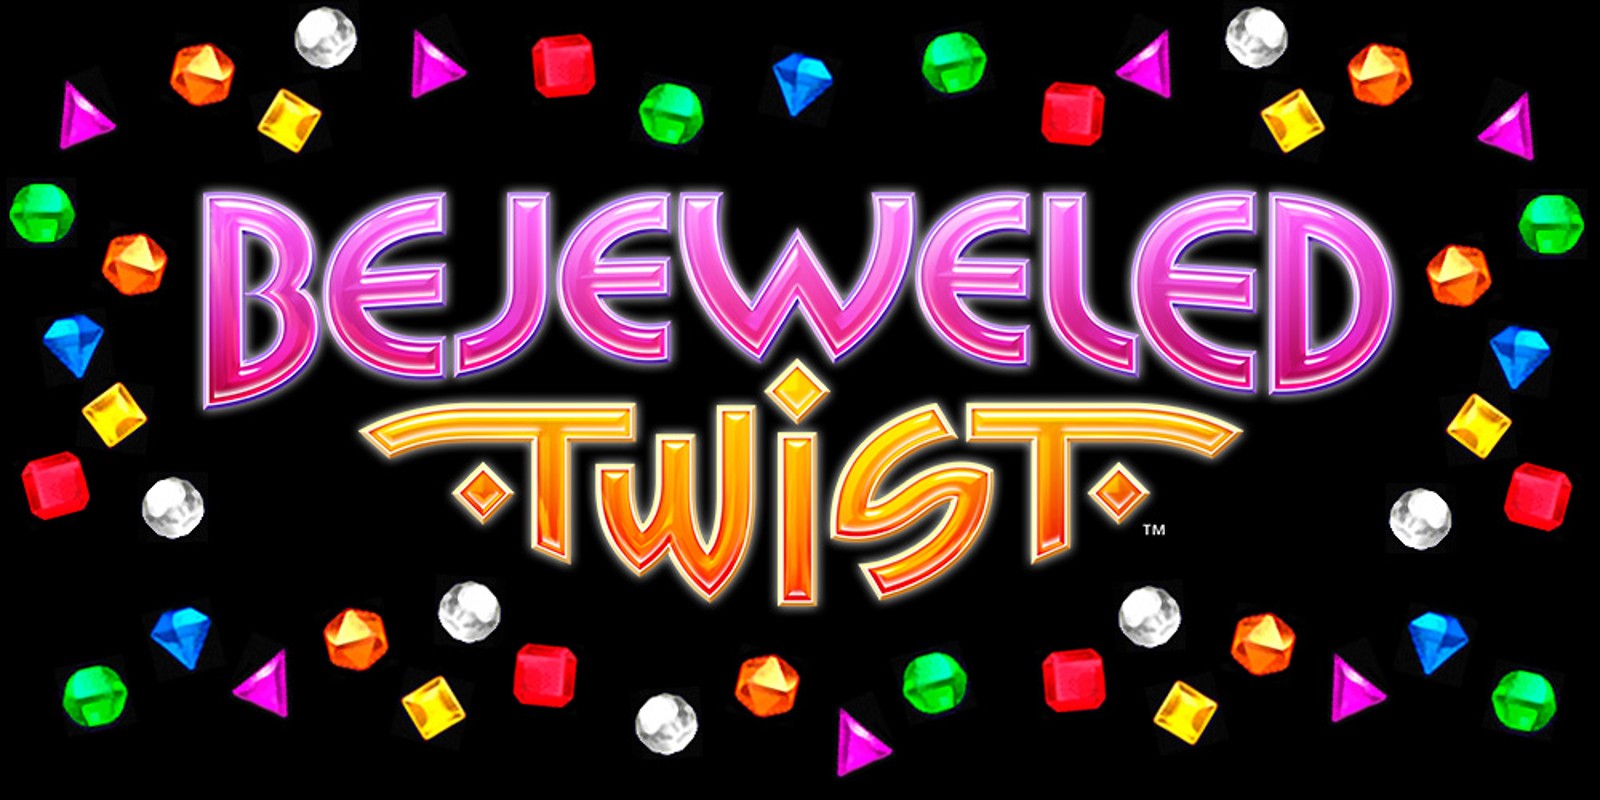 www bejeweled twist com